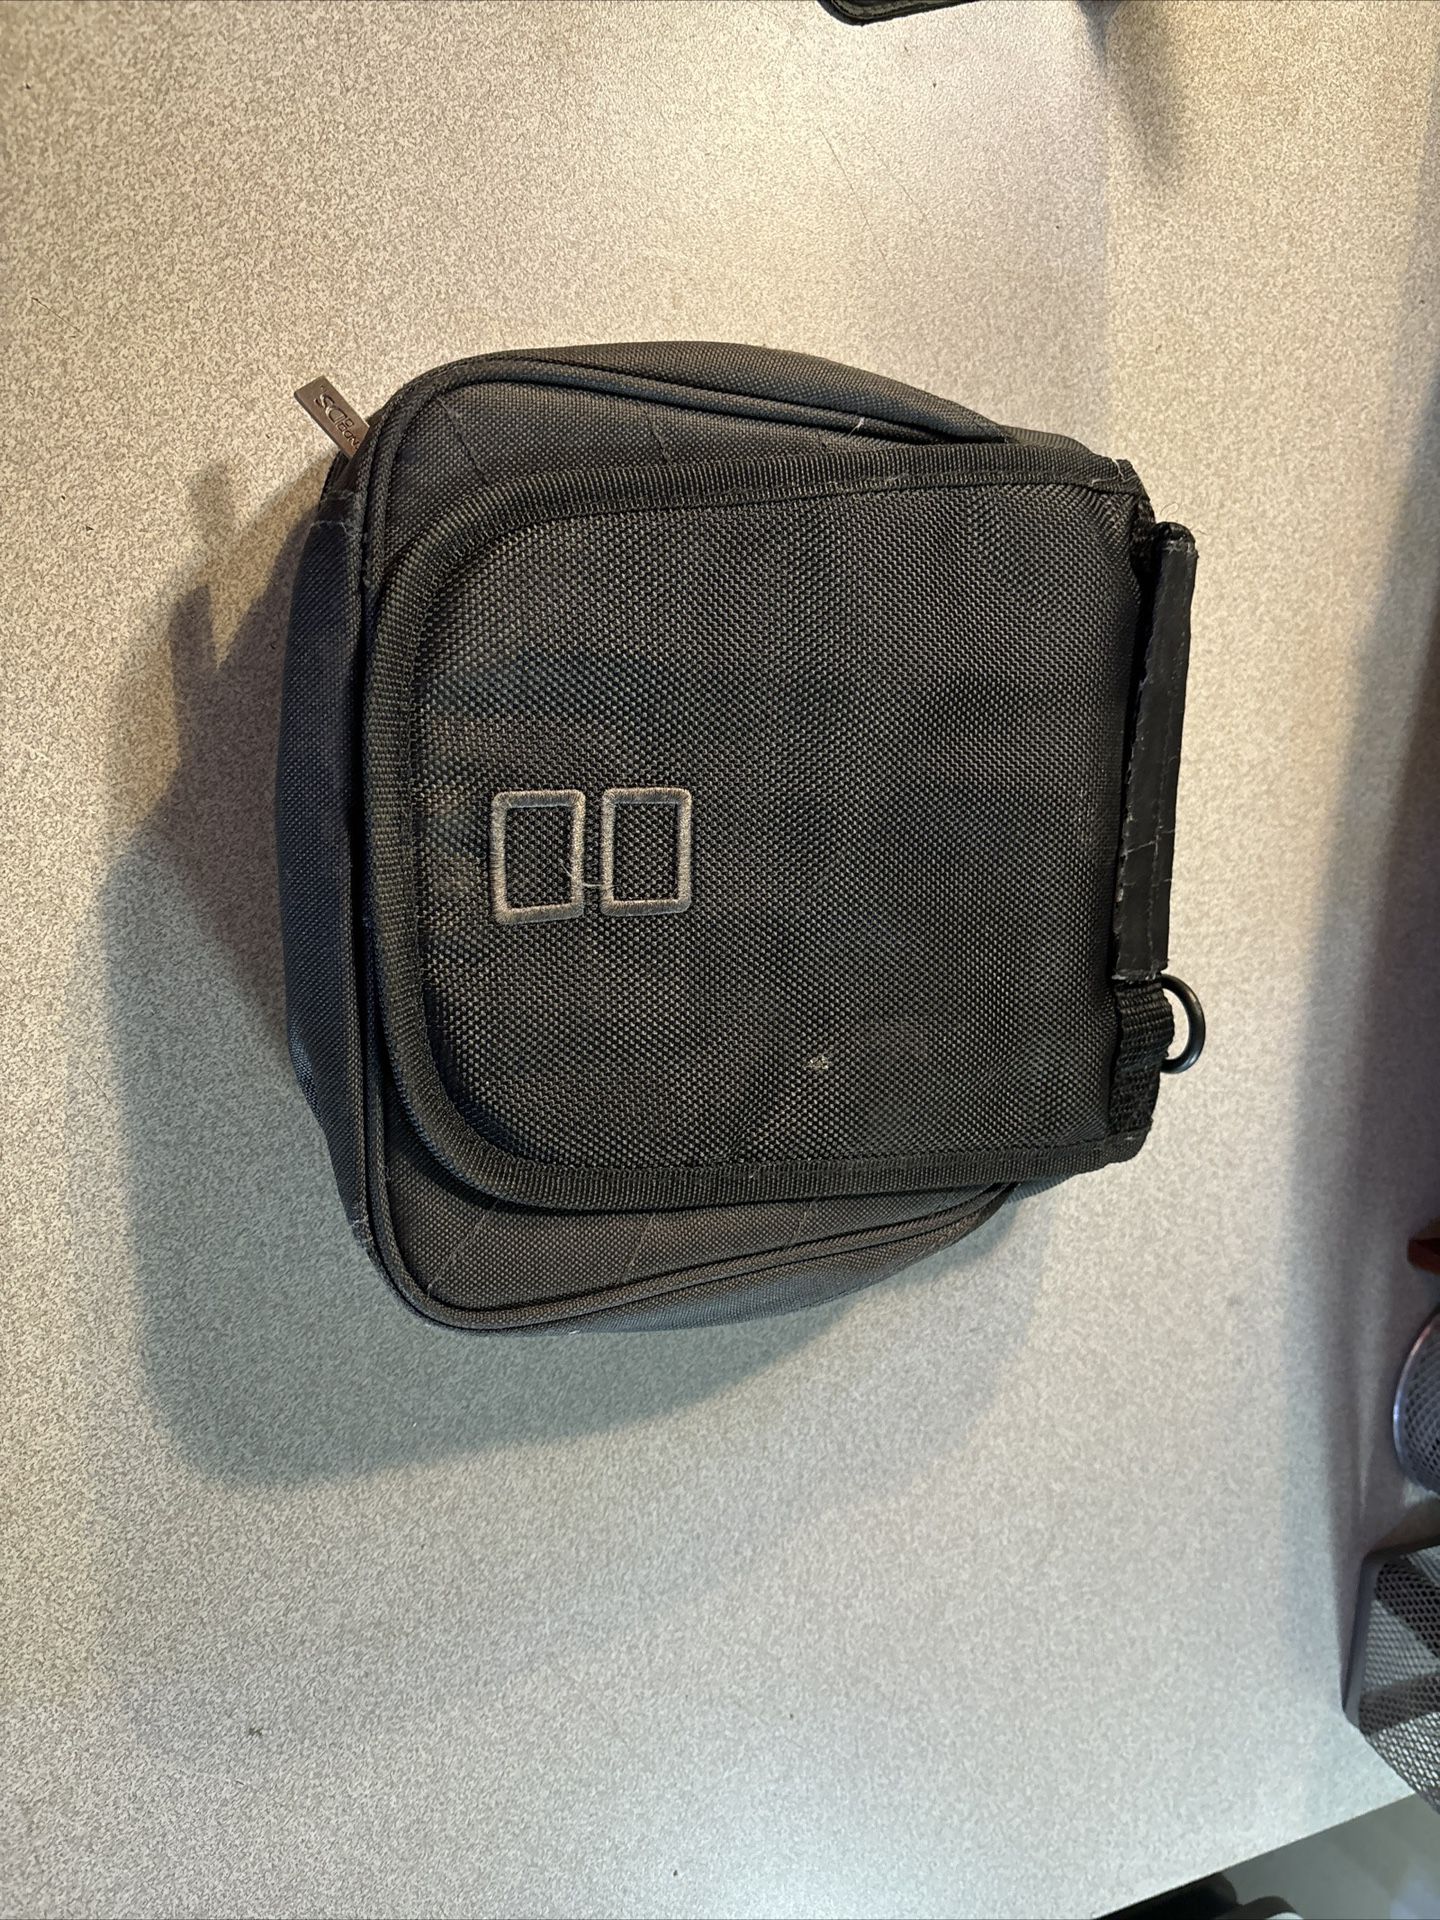 Nintendo DS 3DS DSI Carrying Case Shoulder Strap Black Accessory Game Storage